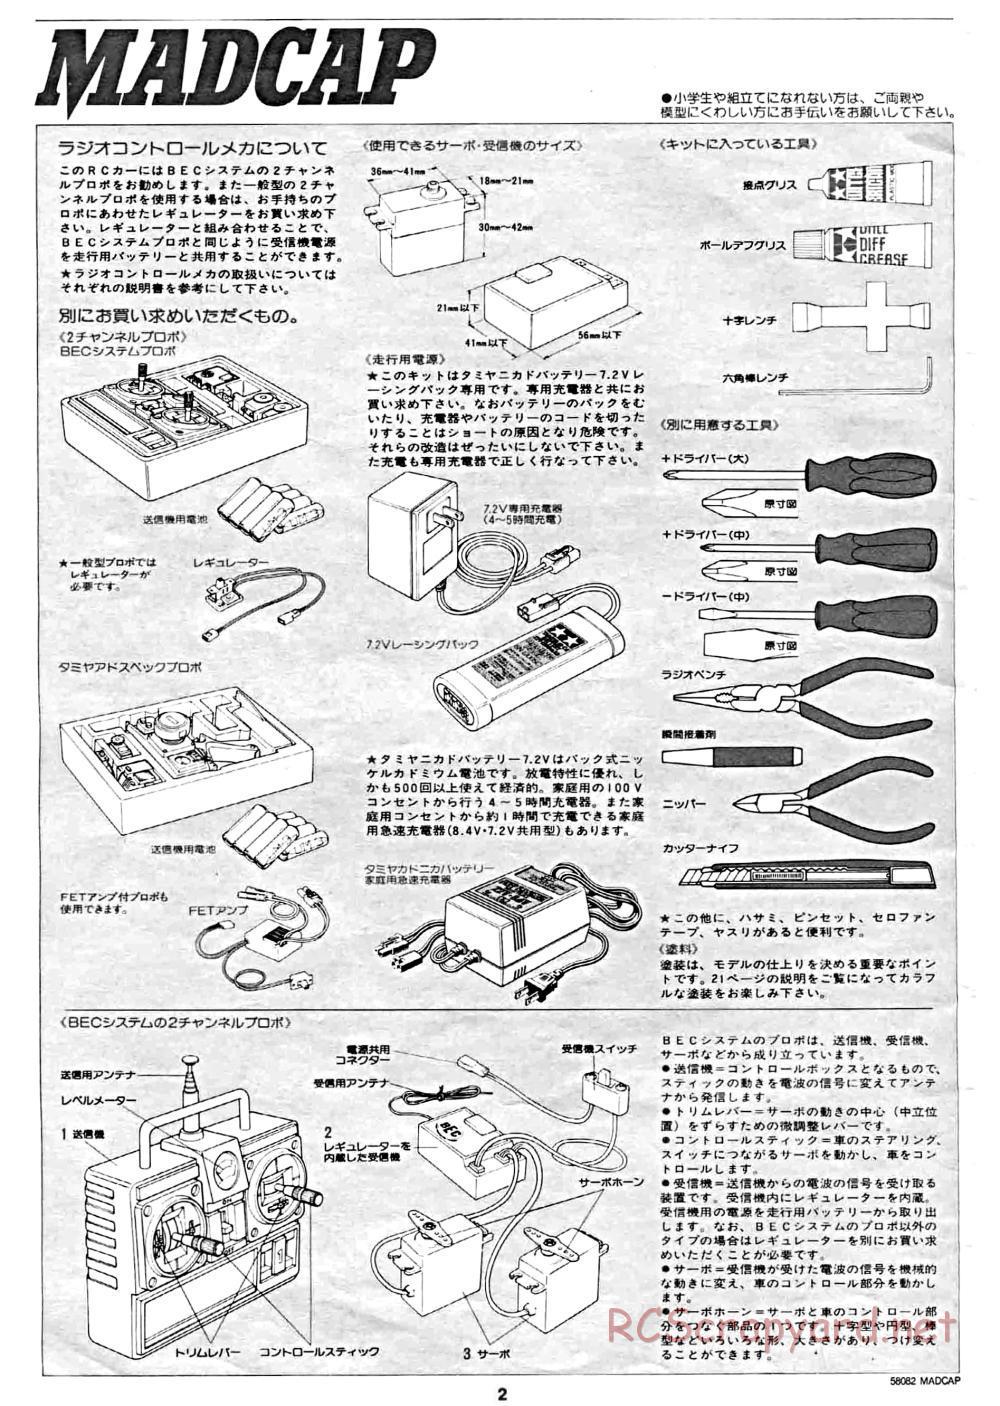 Tamiya - Madcap - 58082 - Manual - Page 2